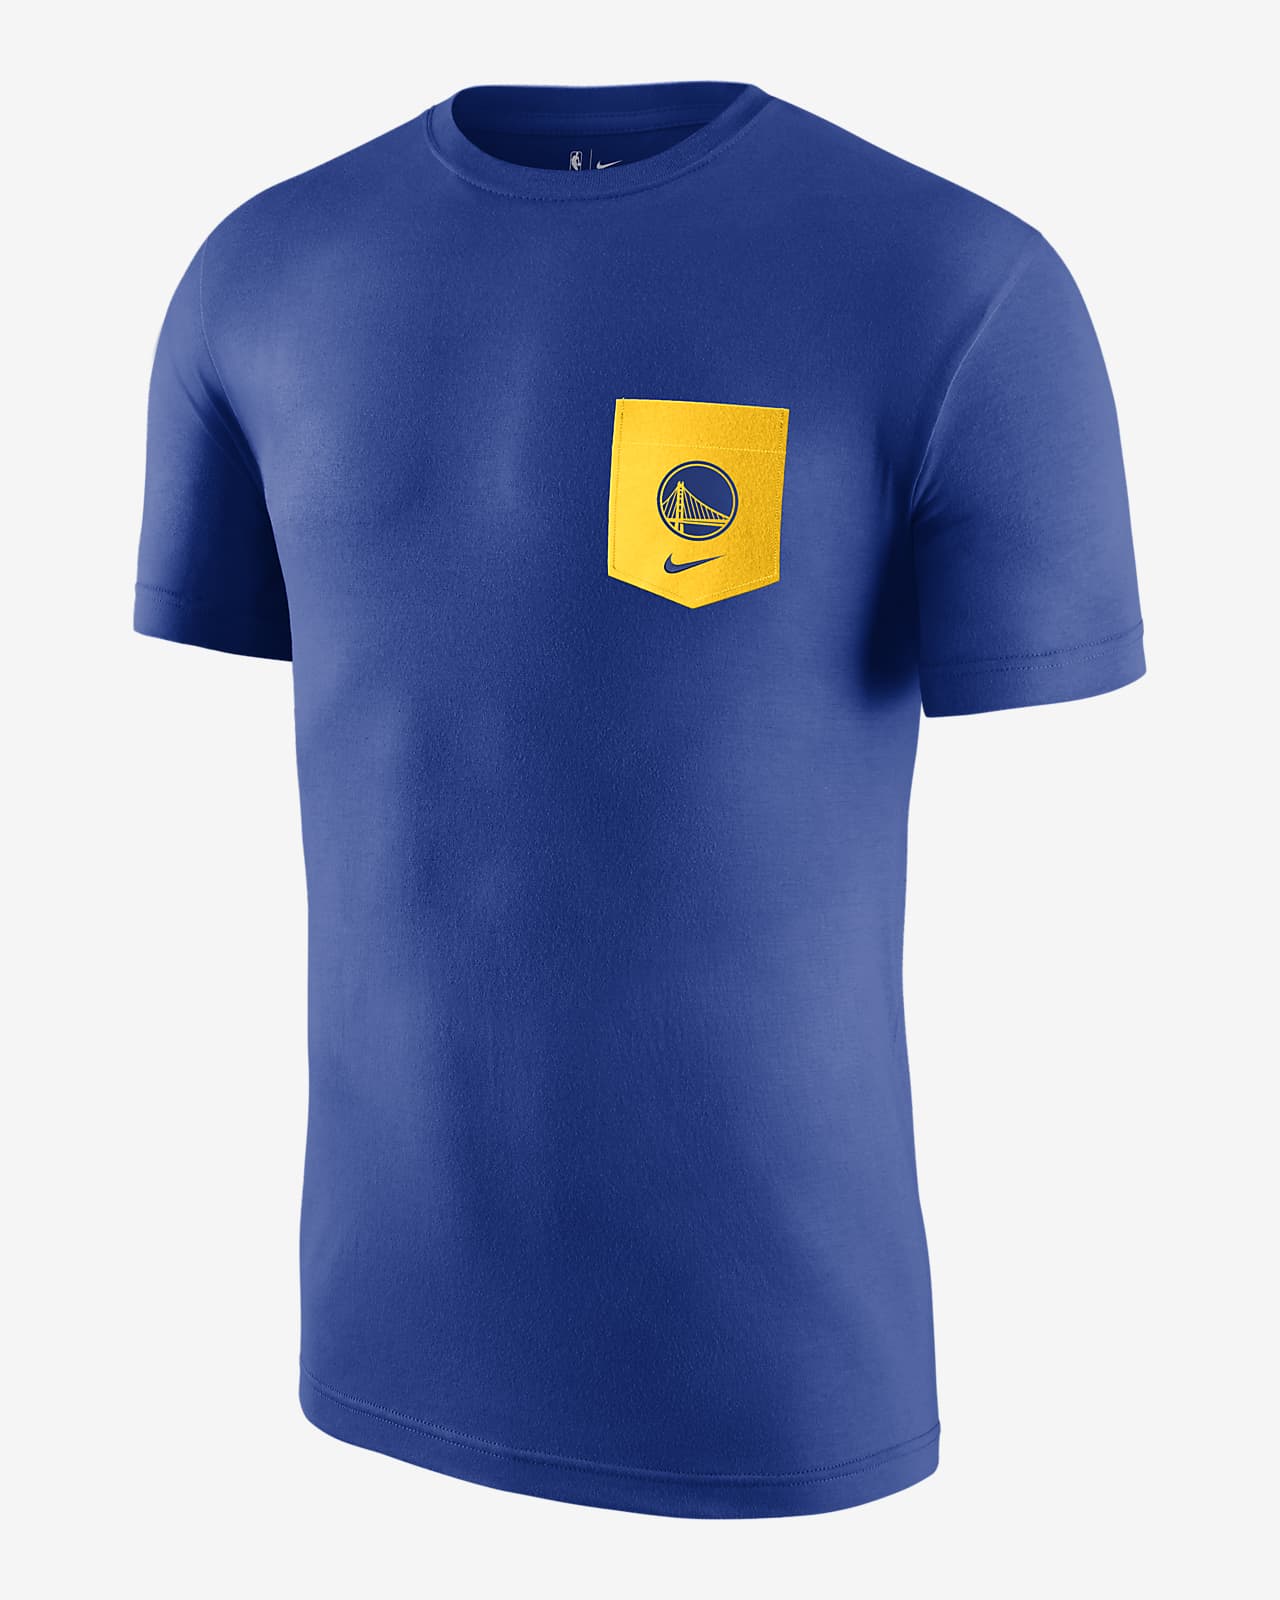 Golden State Warriors Men's Nike NBA Pocket T-Shirt